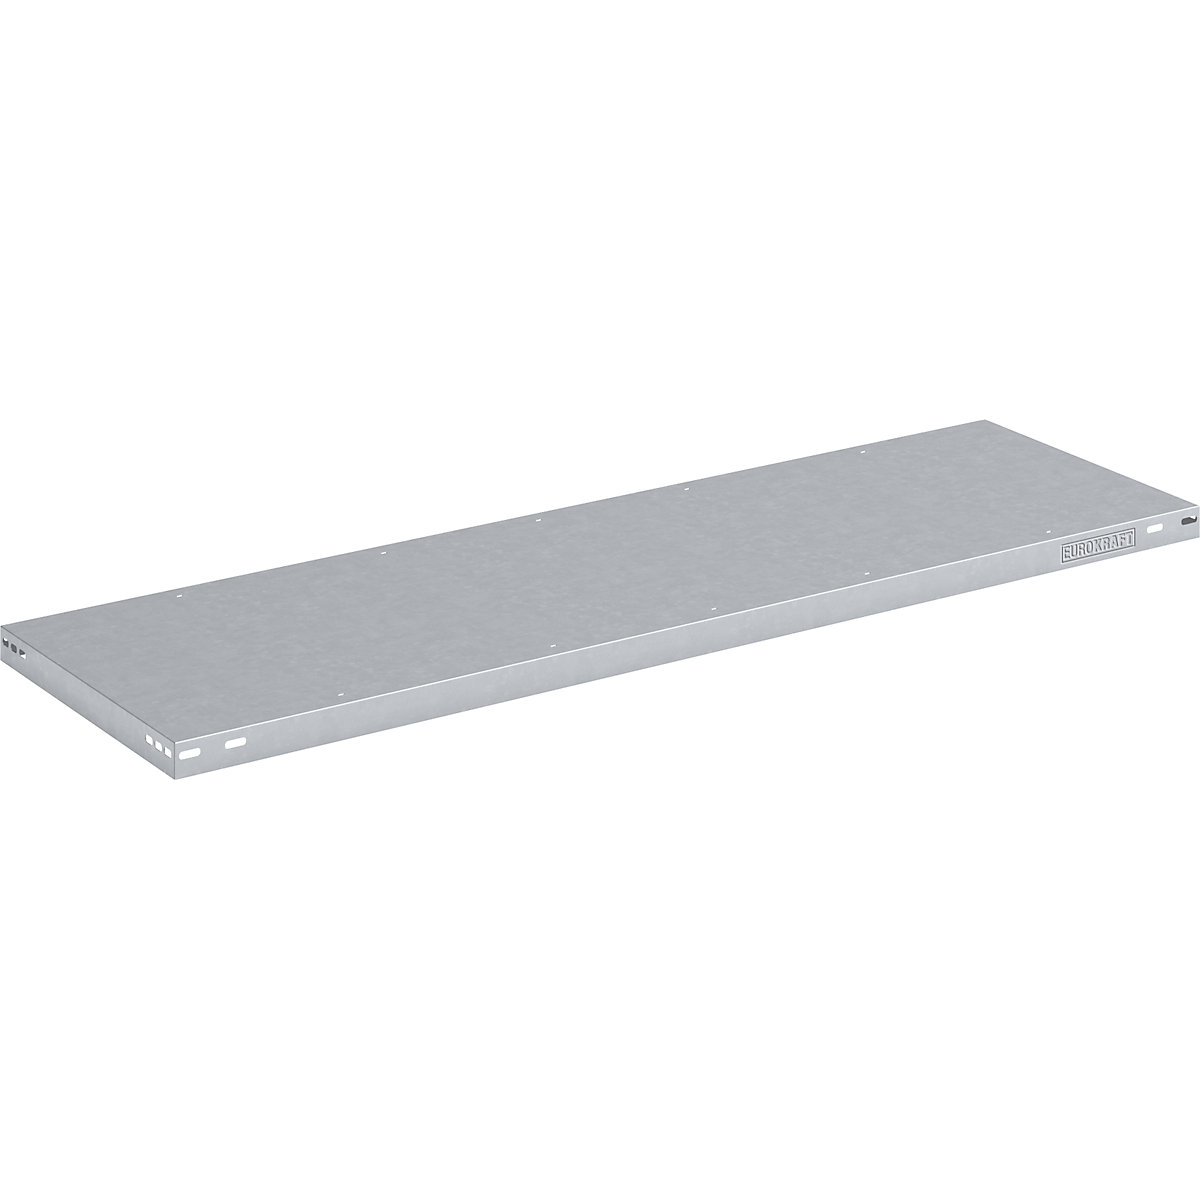 Shelf for boltless storage shelving, width 1300 mm – eurokraft pro, zinc plated, depth 500 mm